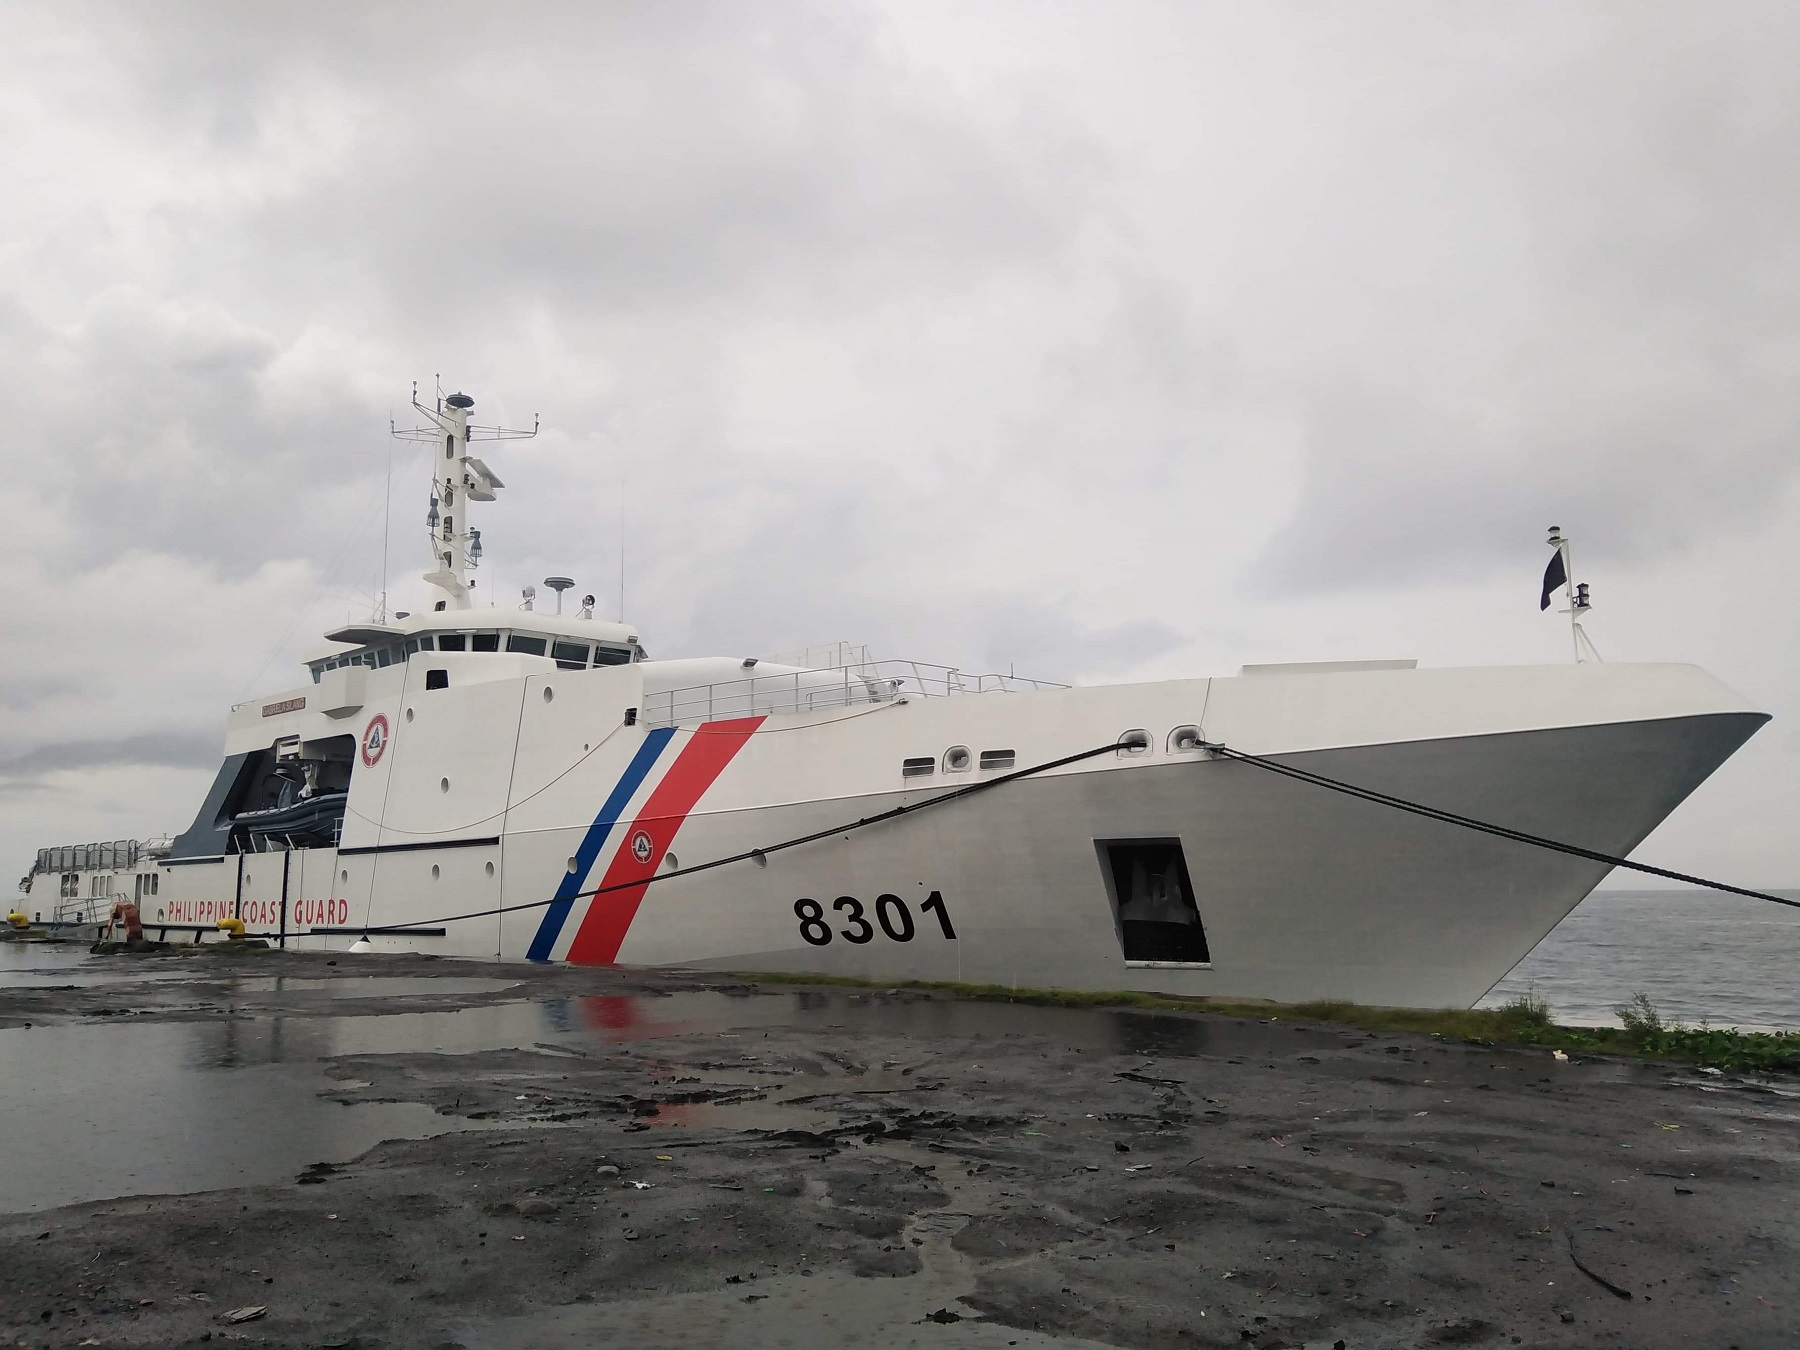 Philippine Coast Guard BRP Gabriela Silang (OPV-8301)